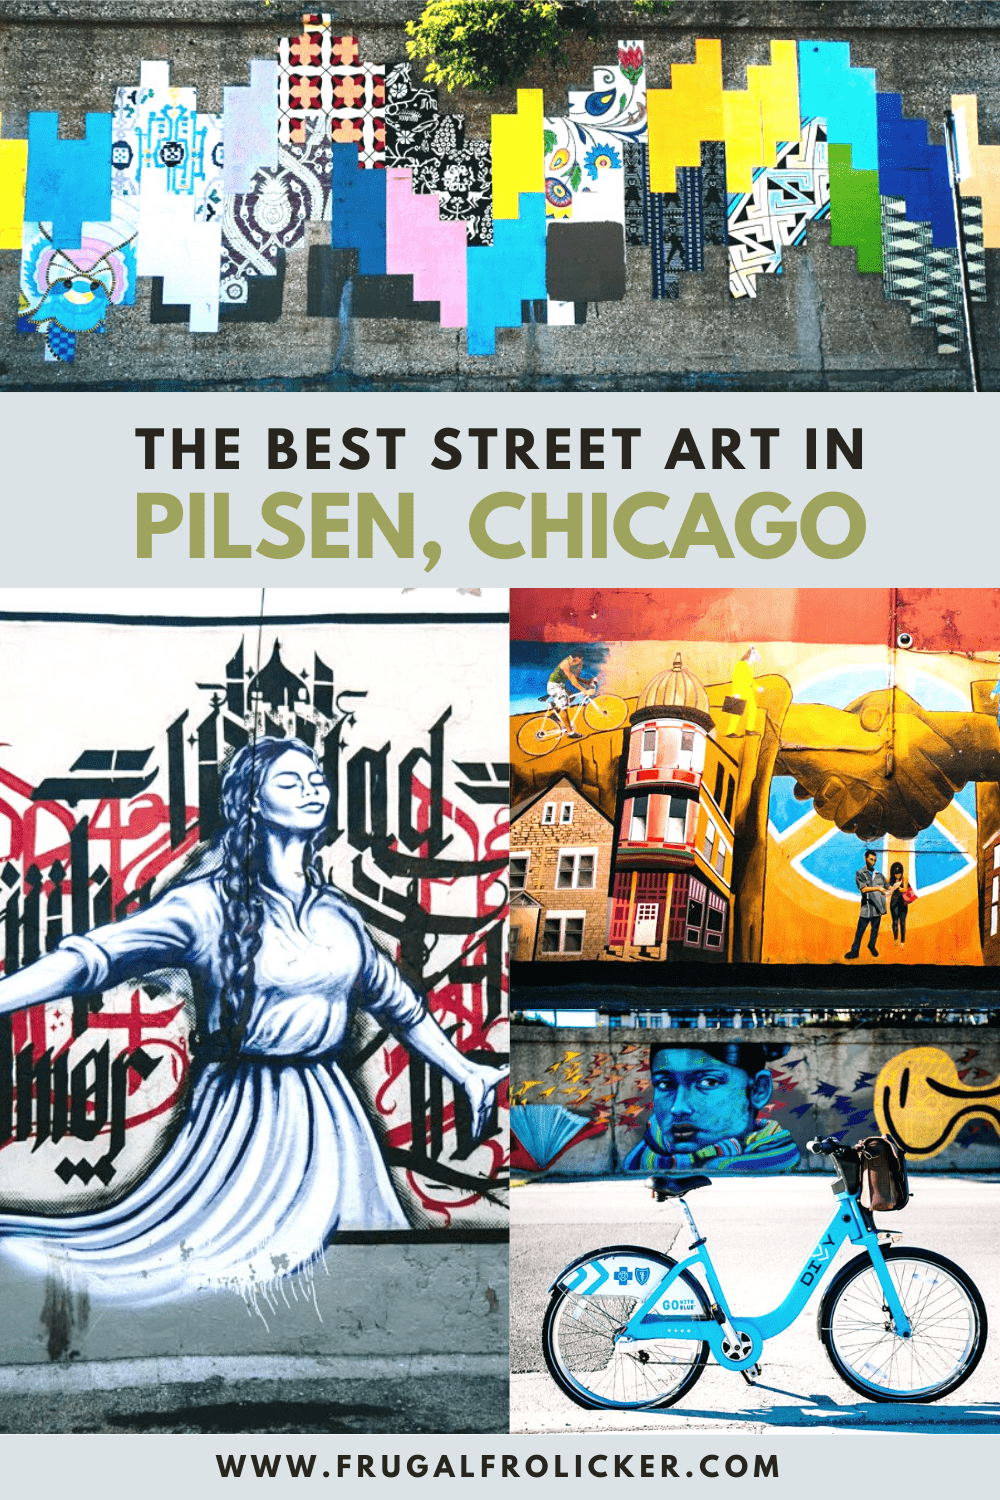 Street art in Pilsen, Chicago